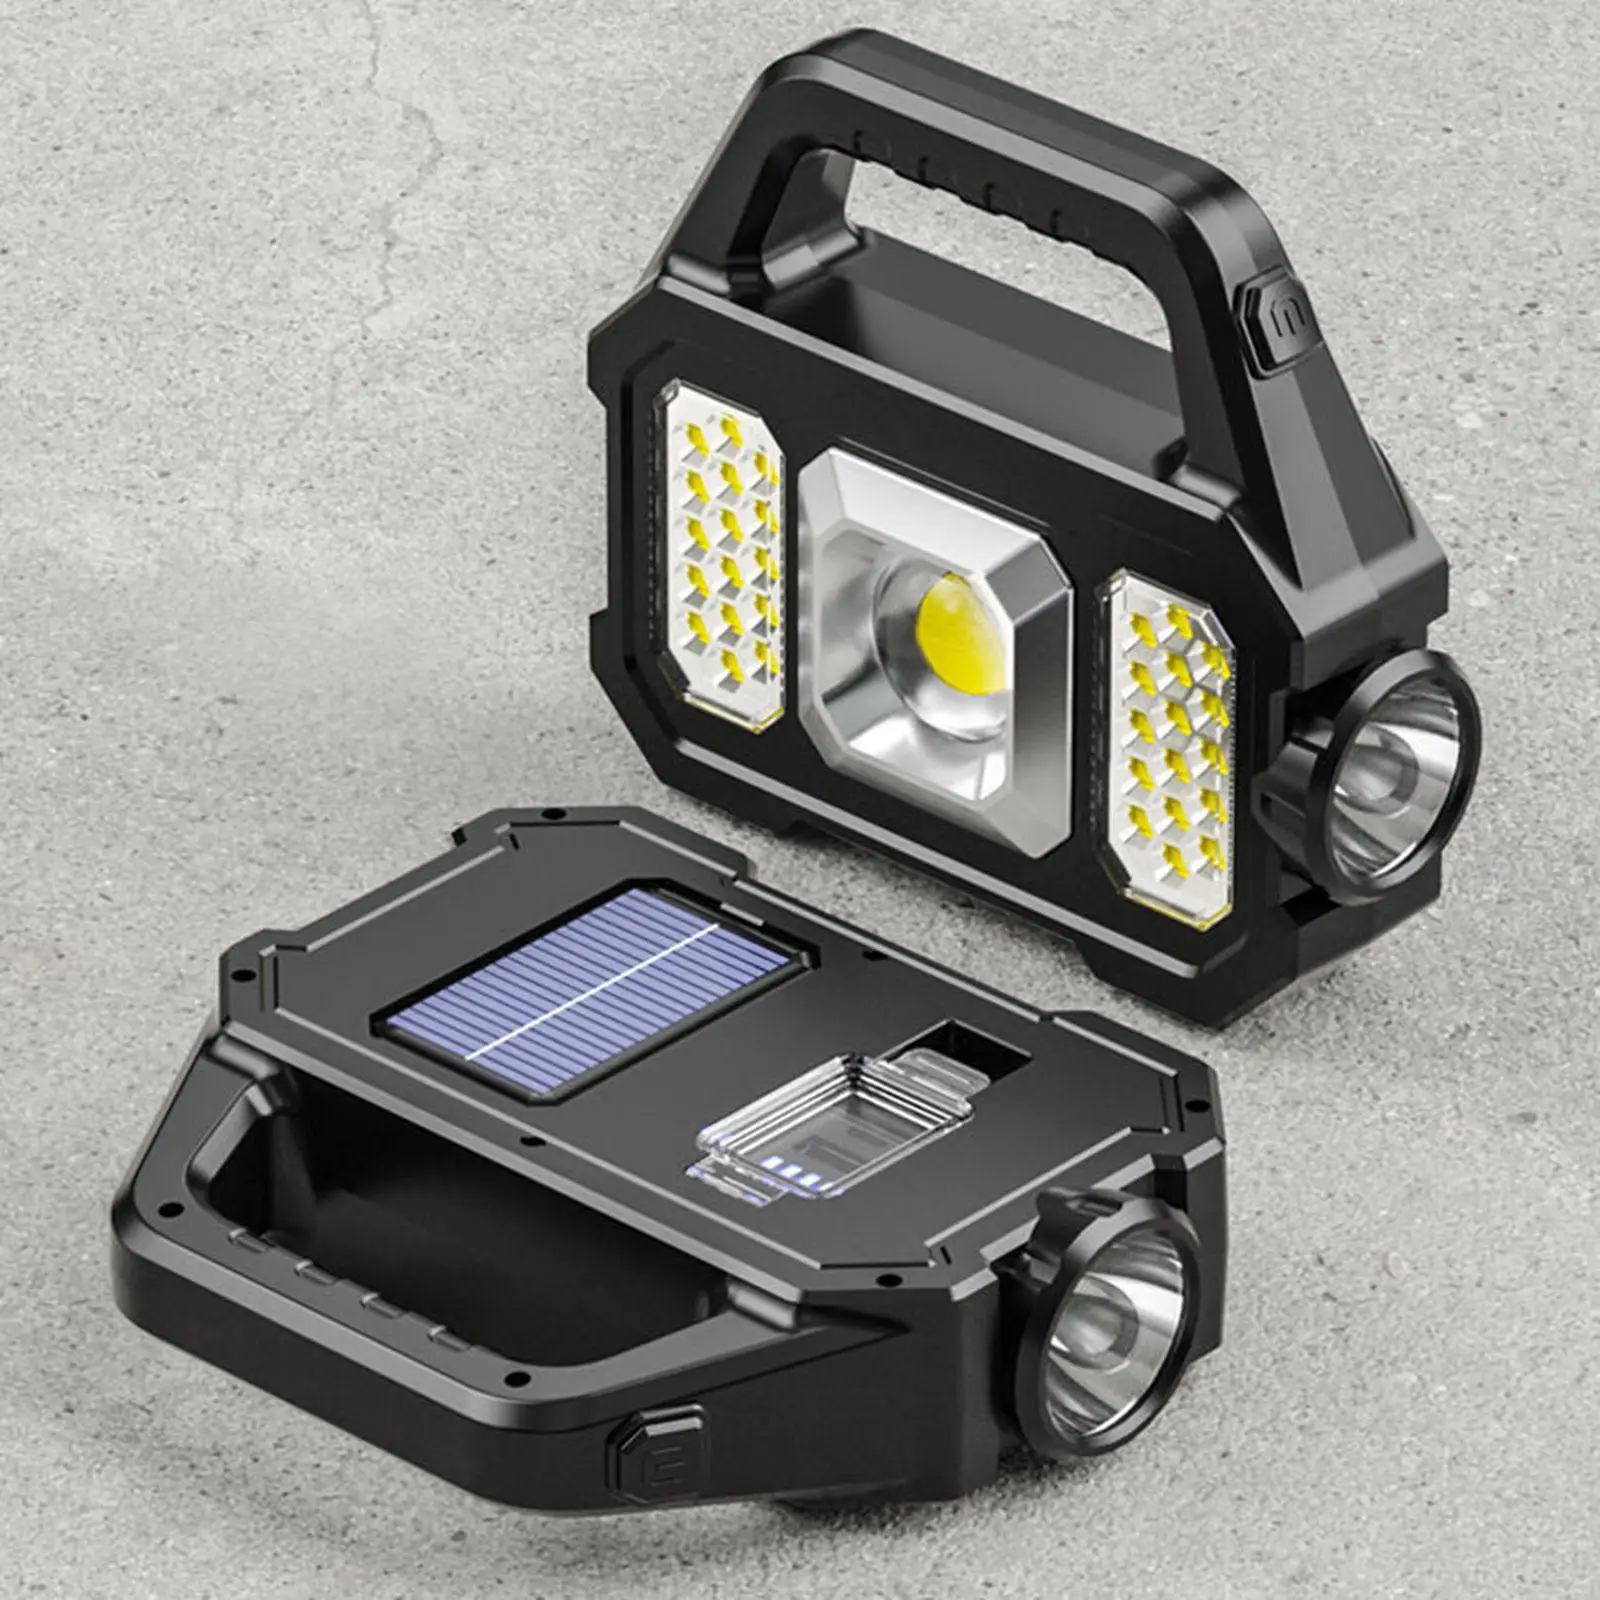 Handheld Work Light Waterproof Heavy Duty Rechargeable Lamp Searchlight for fishing Indoor Emergencies Hiking